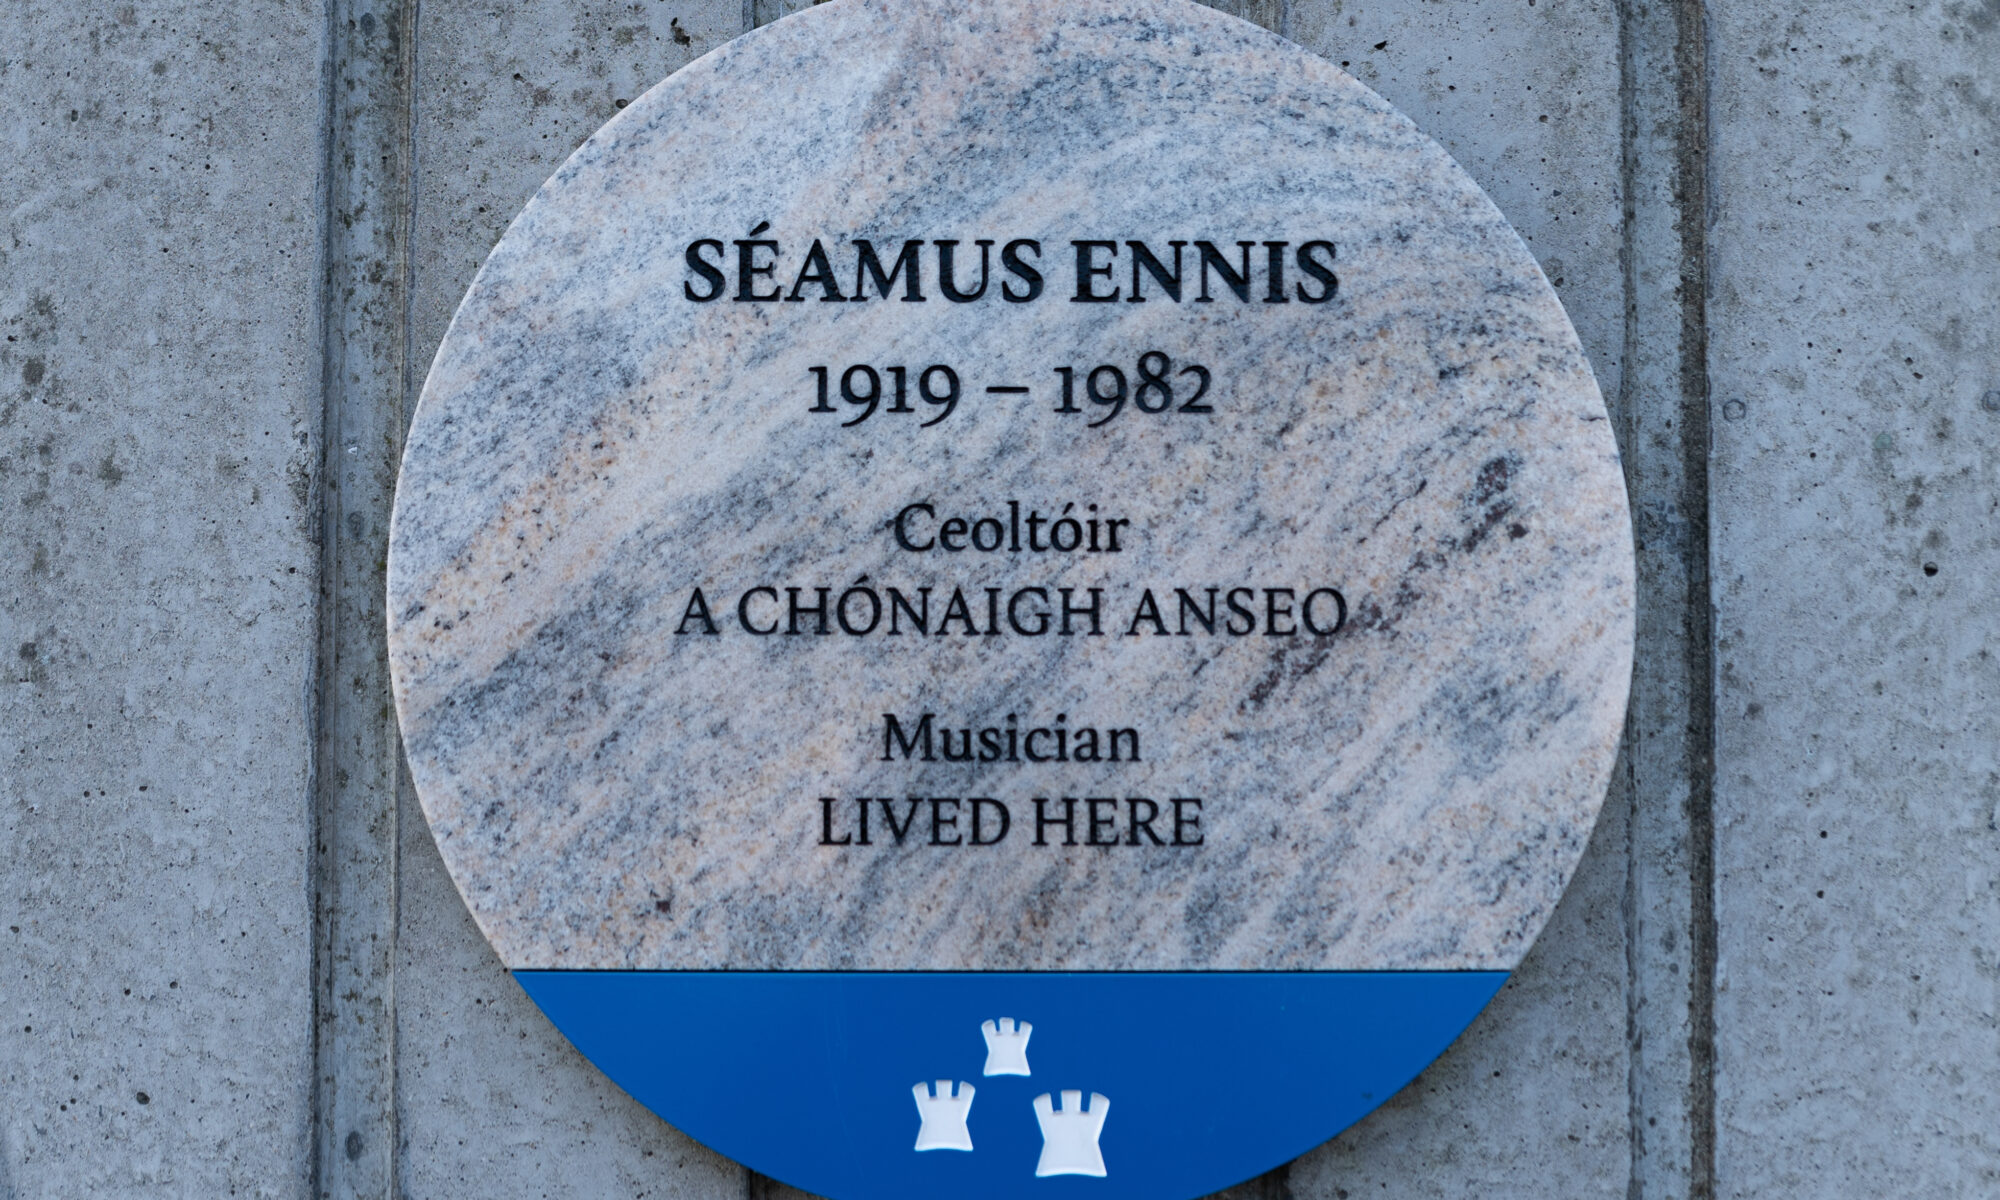 Photograph of Dublin City Council plaque honouring Seamus Ennis